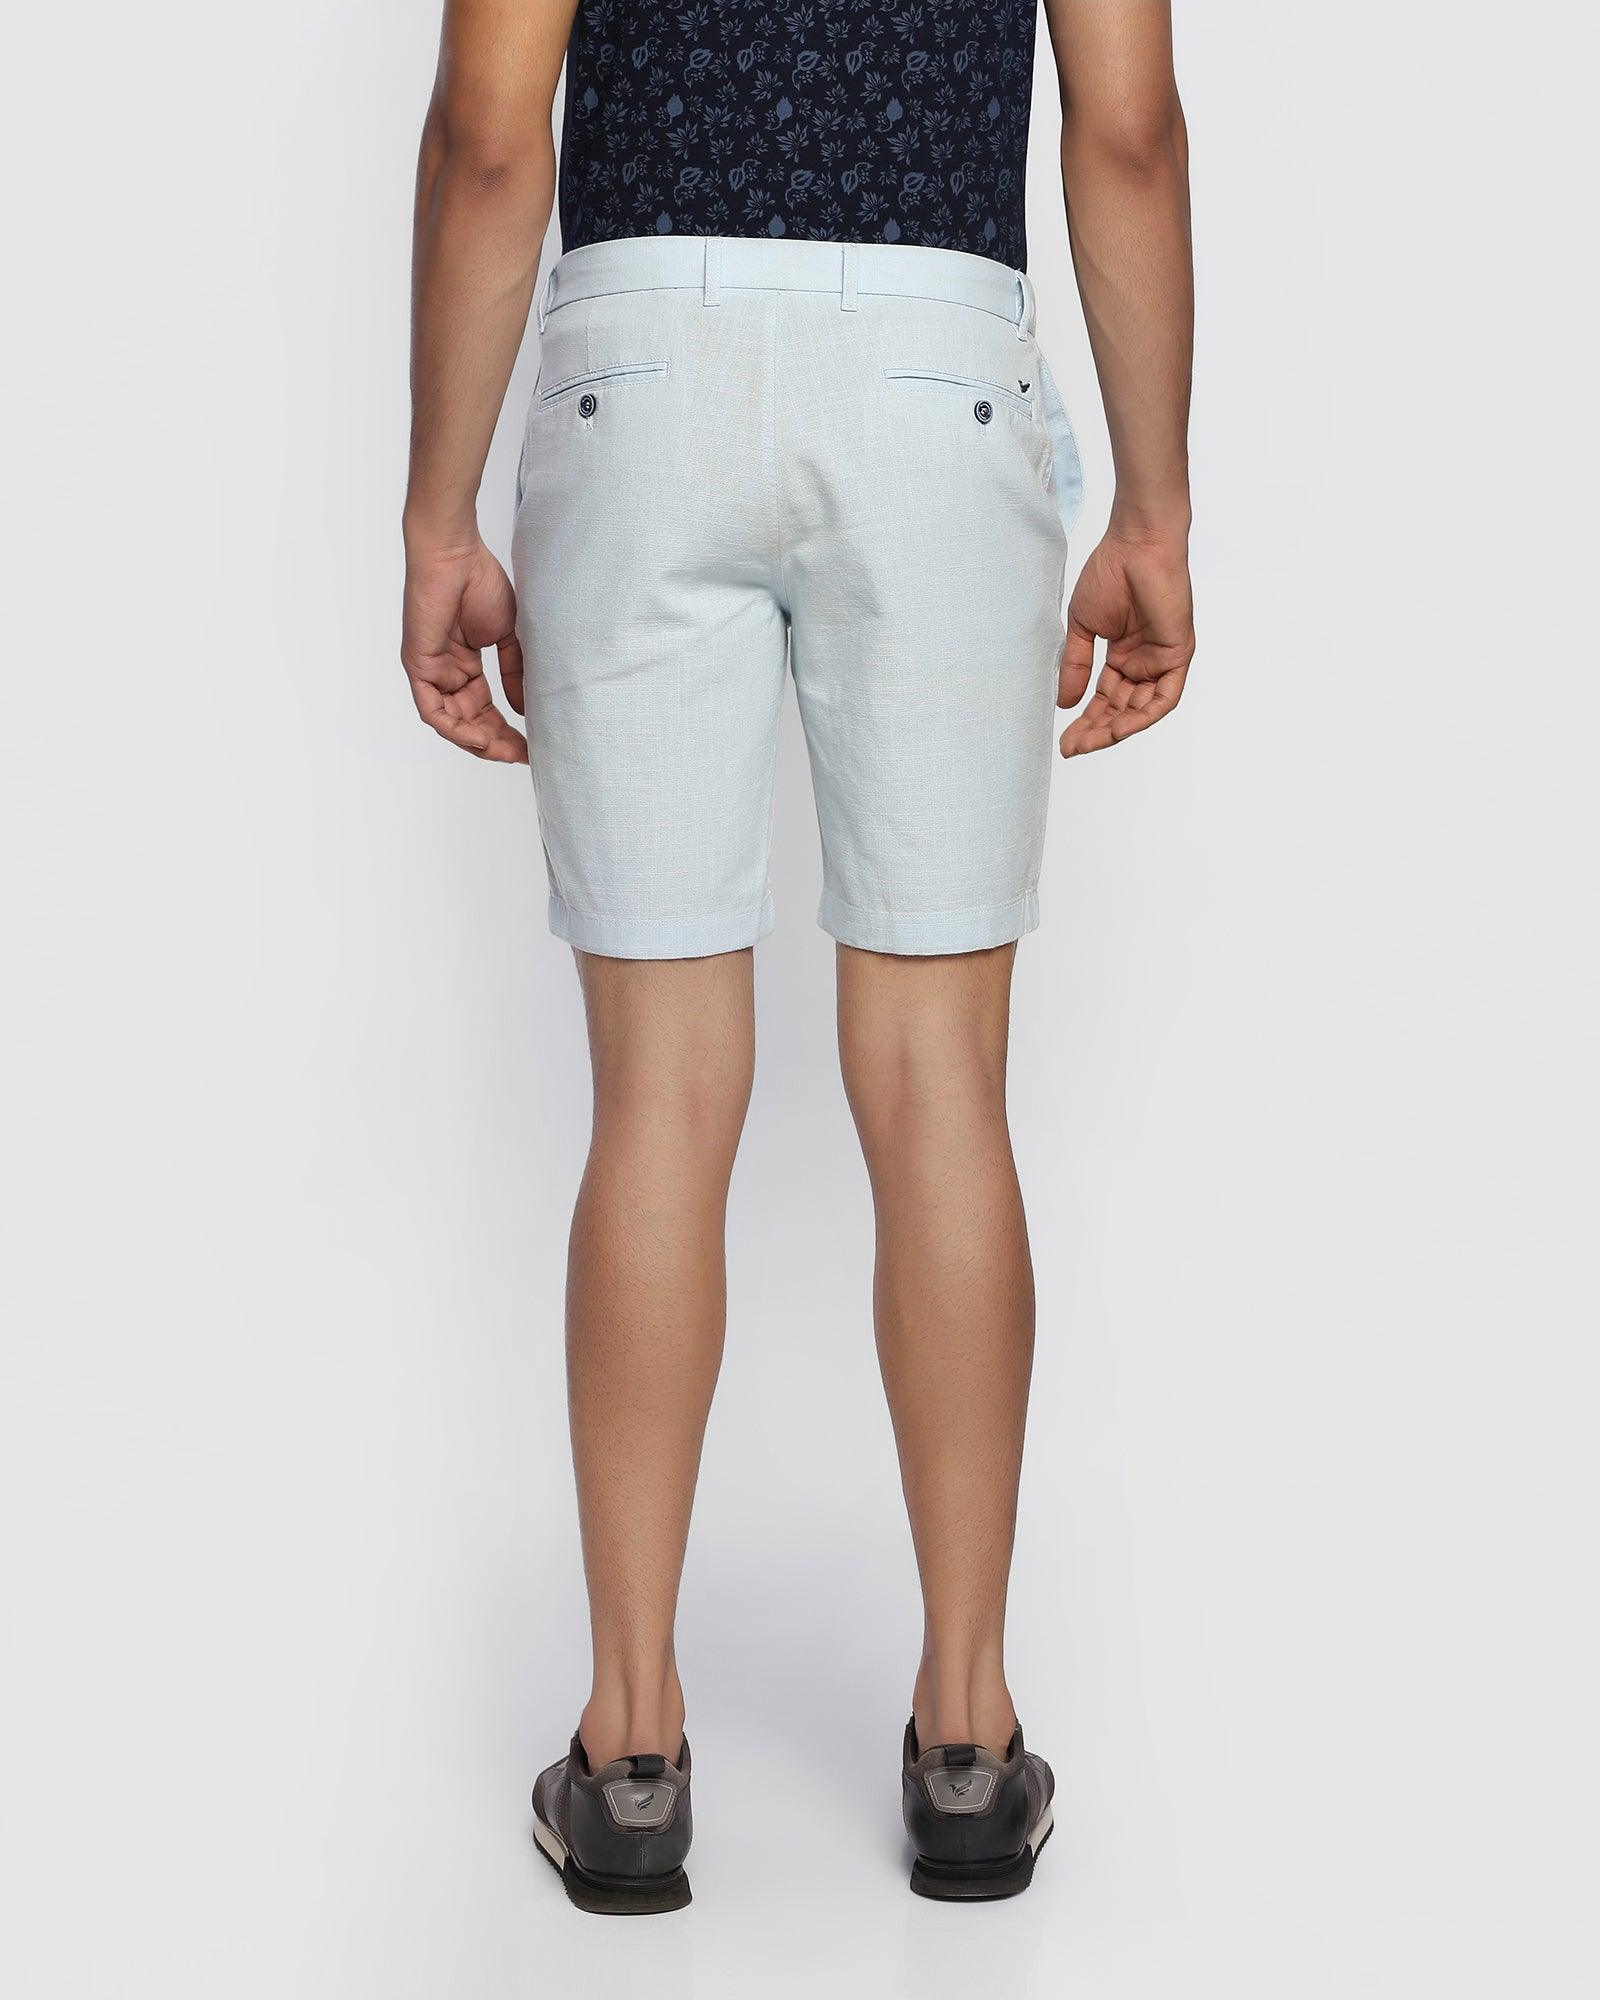 Casual Light Blue Solid Shorts - Com